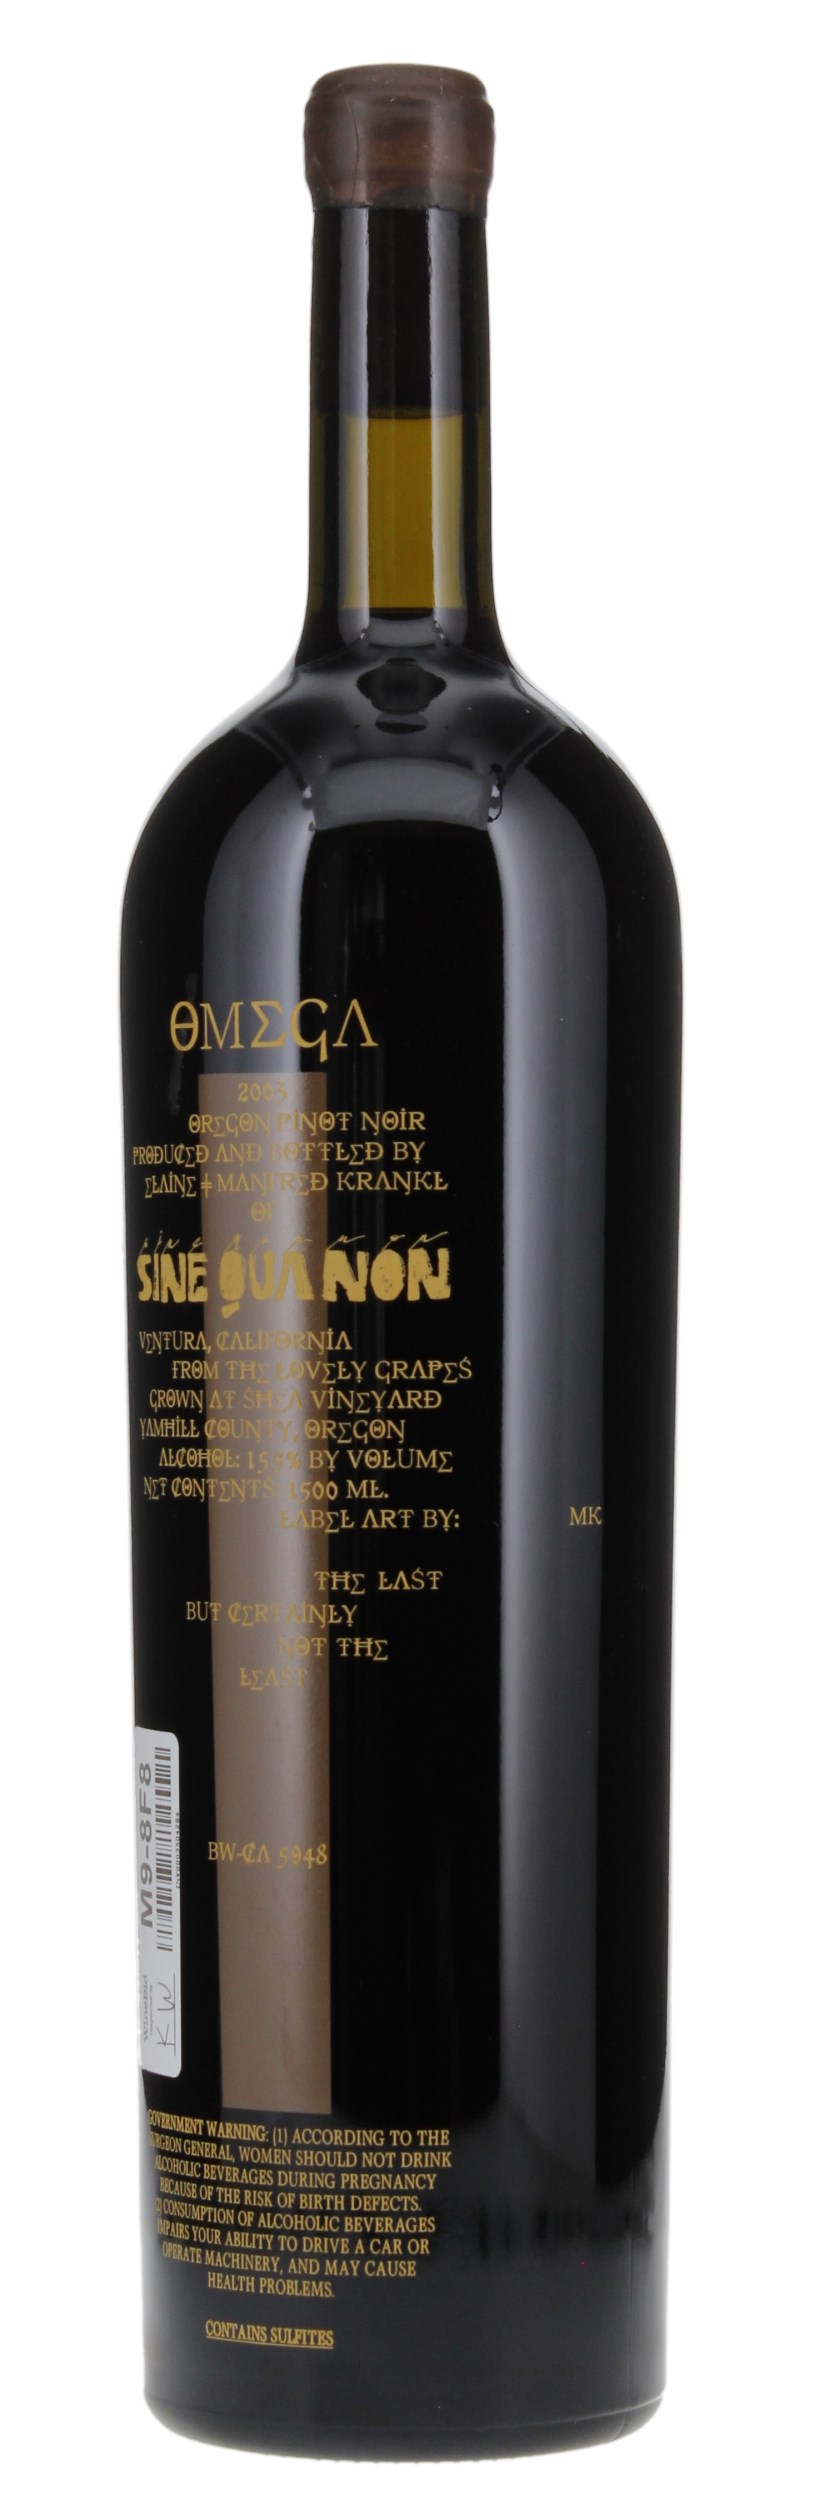 2003 Sine Qua Non Omega Shea Vineyard Pinot Noir, 1.5ltr